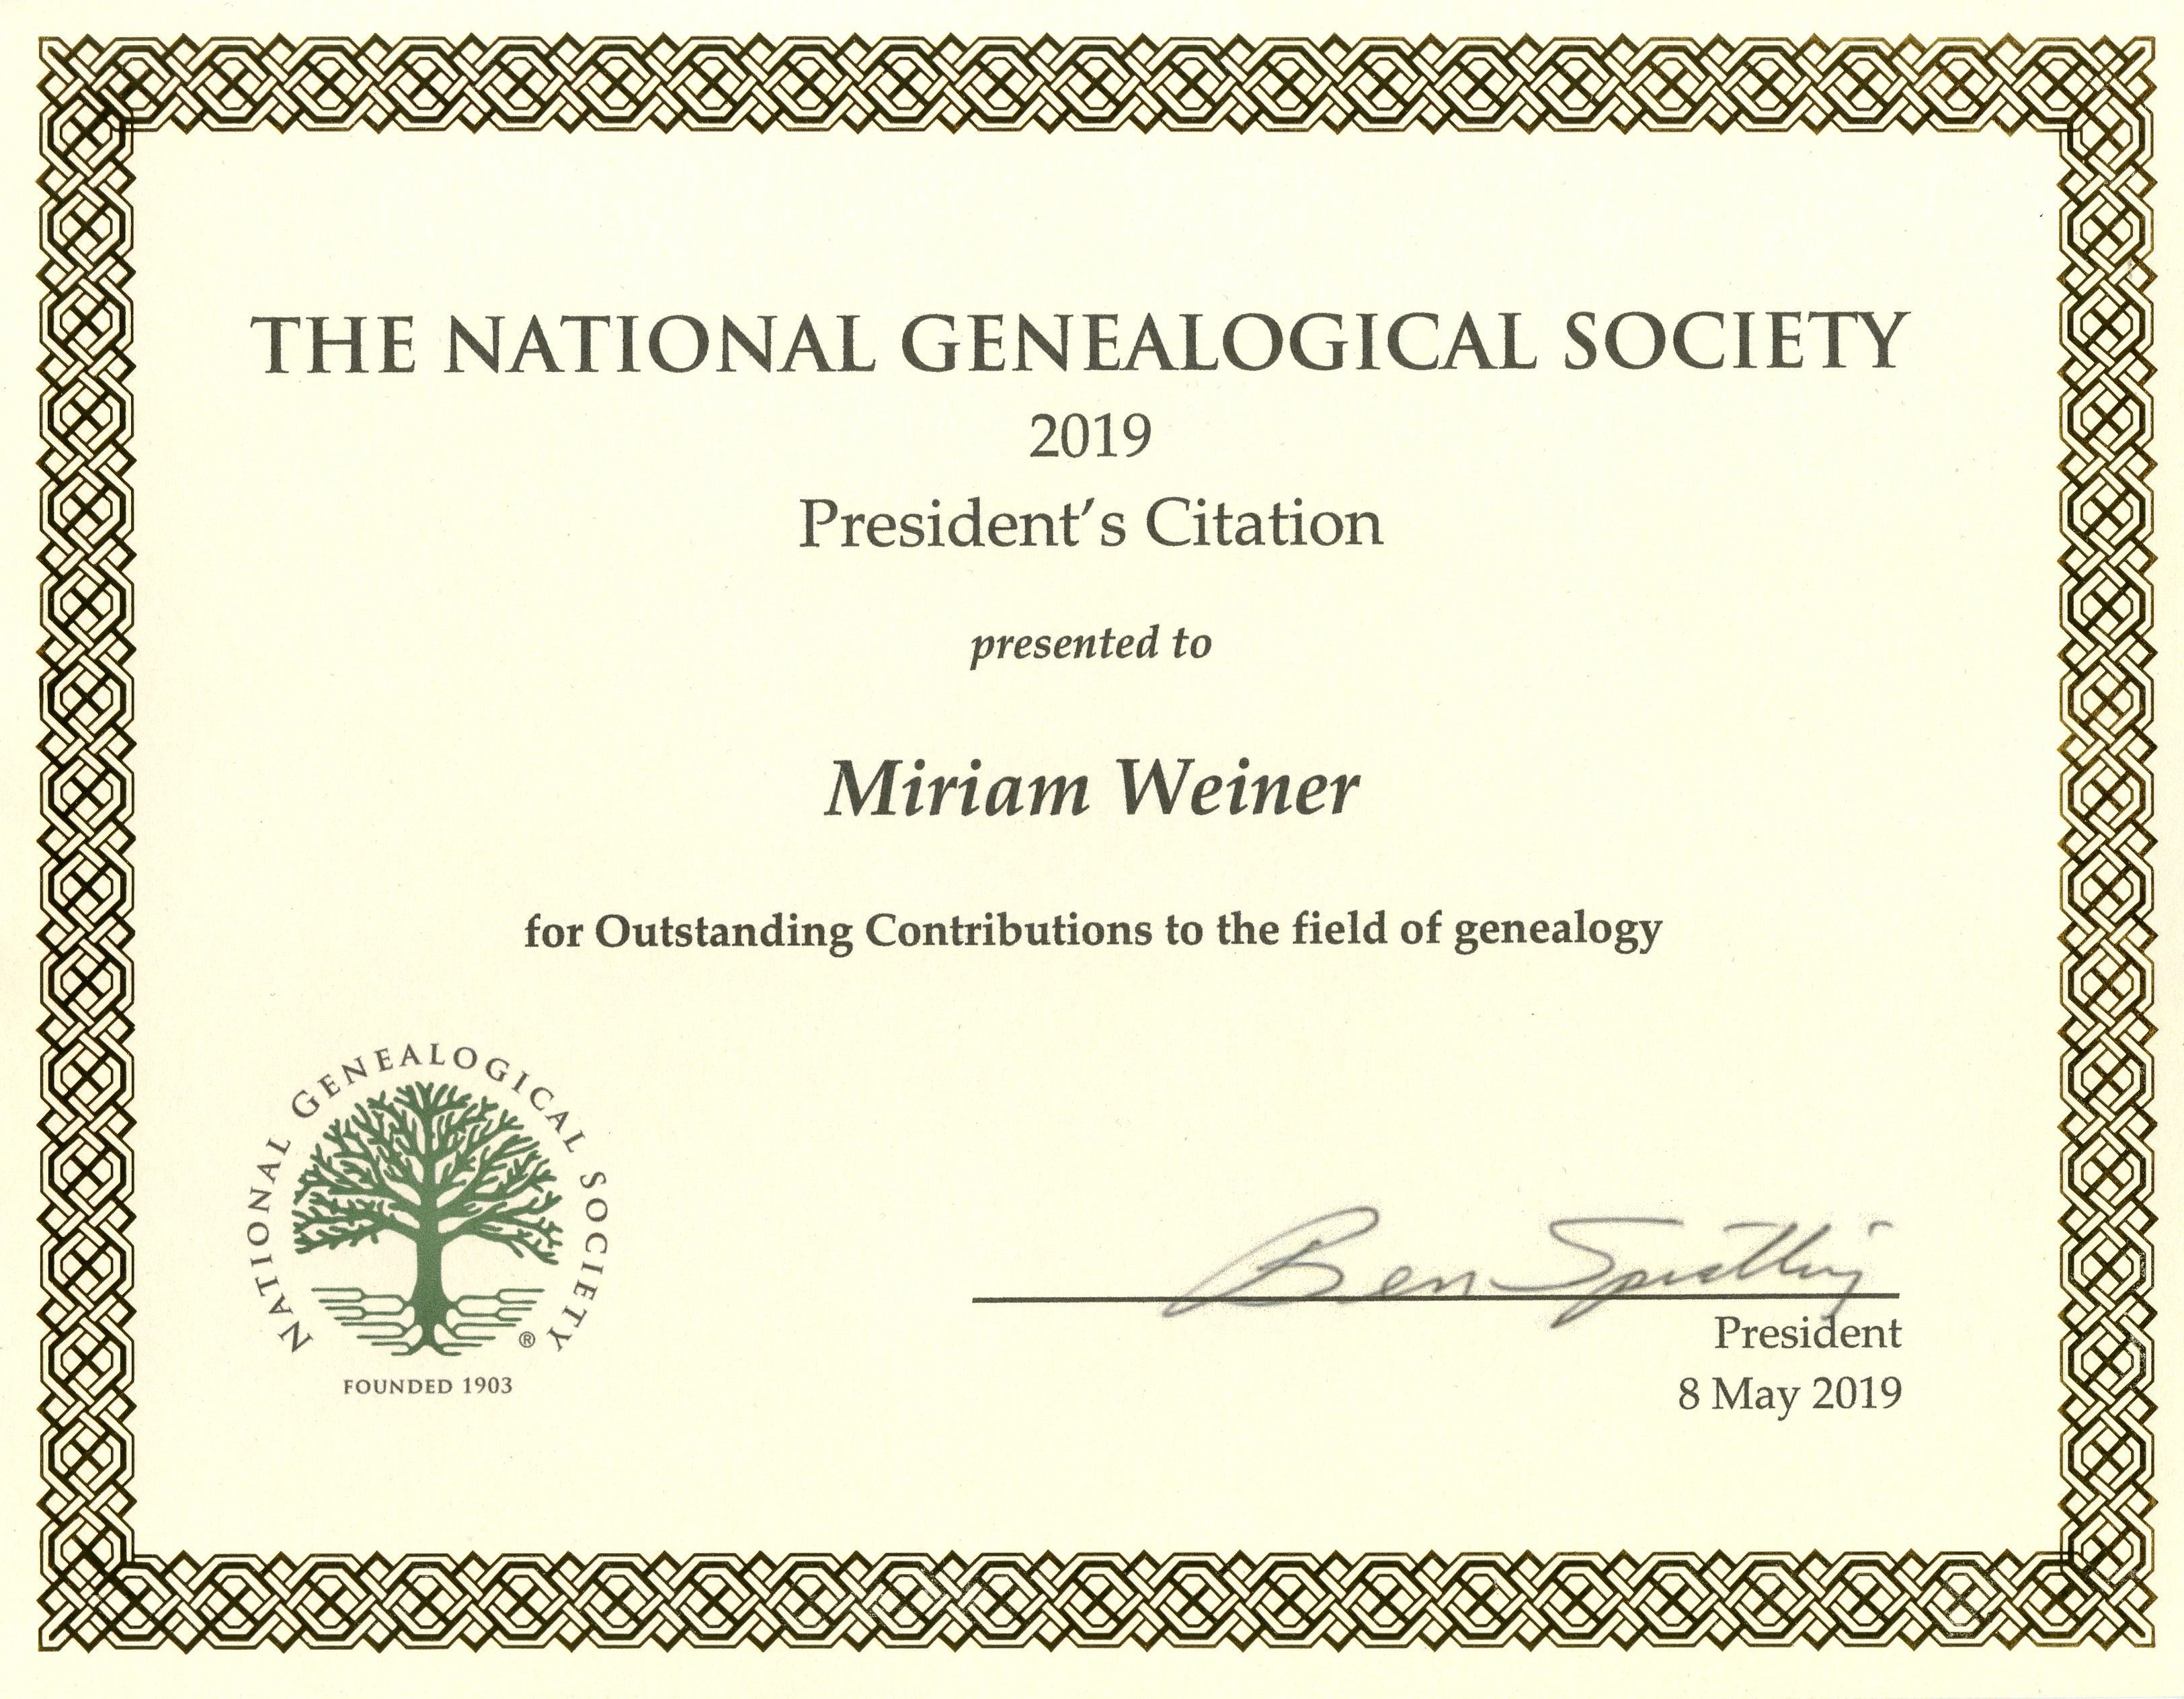 Federation of Genealogical Societies, 1991 (large)